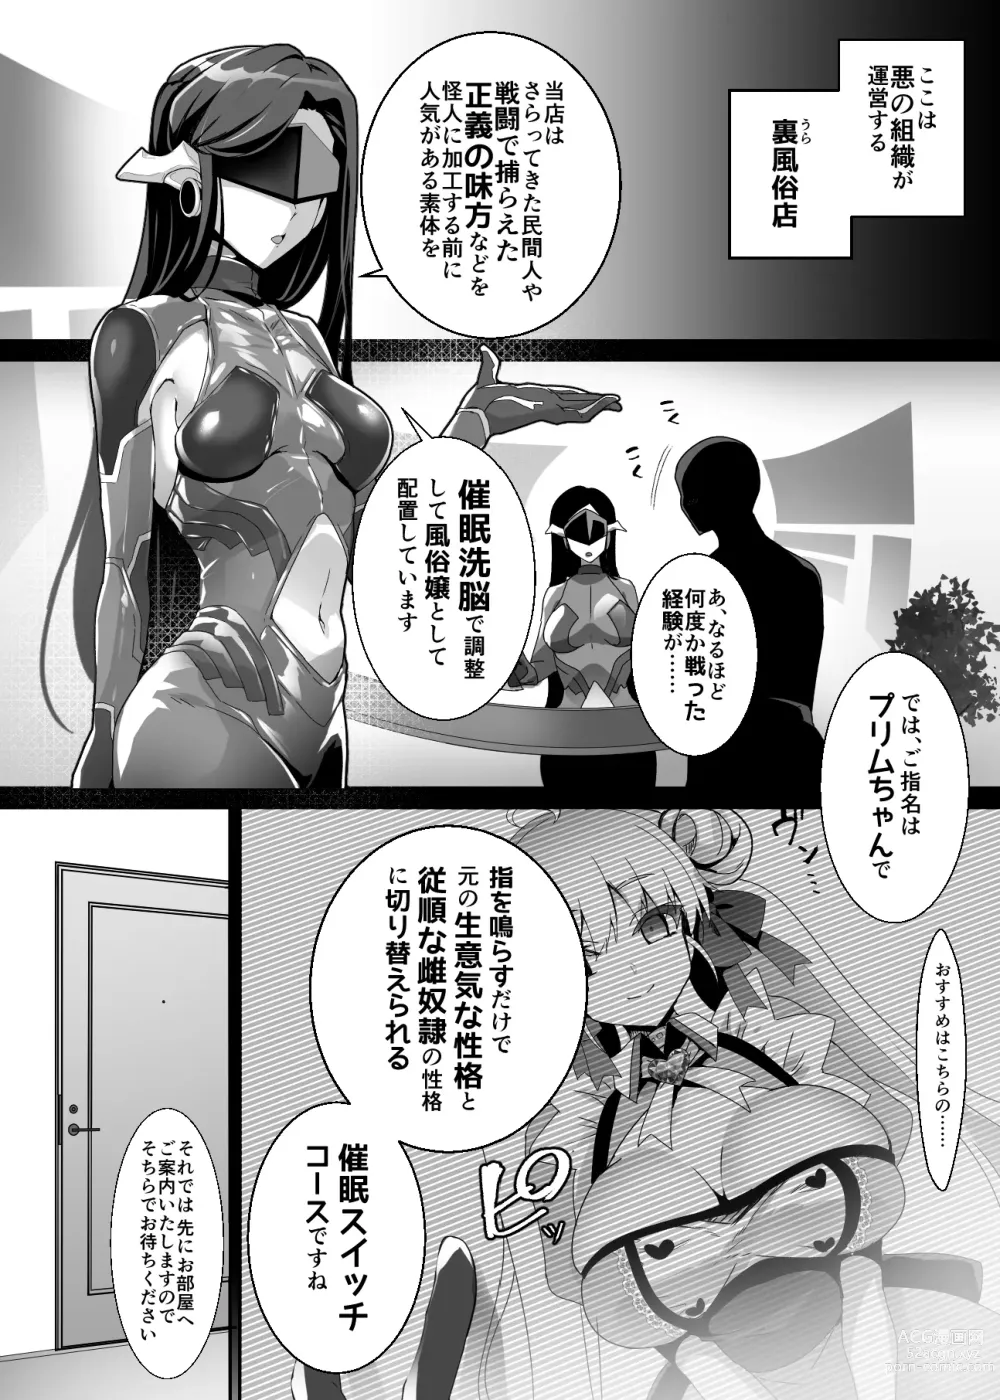 Page 4 of doujinshi 元魔法少女がいる風俗店 -催眠洗脳で生意気わからせ⇔メス化ご奉仕、強制切り替えプレイ